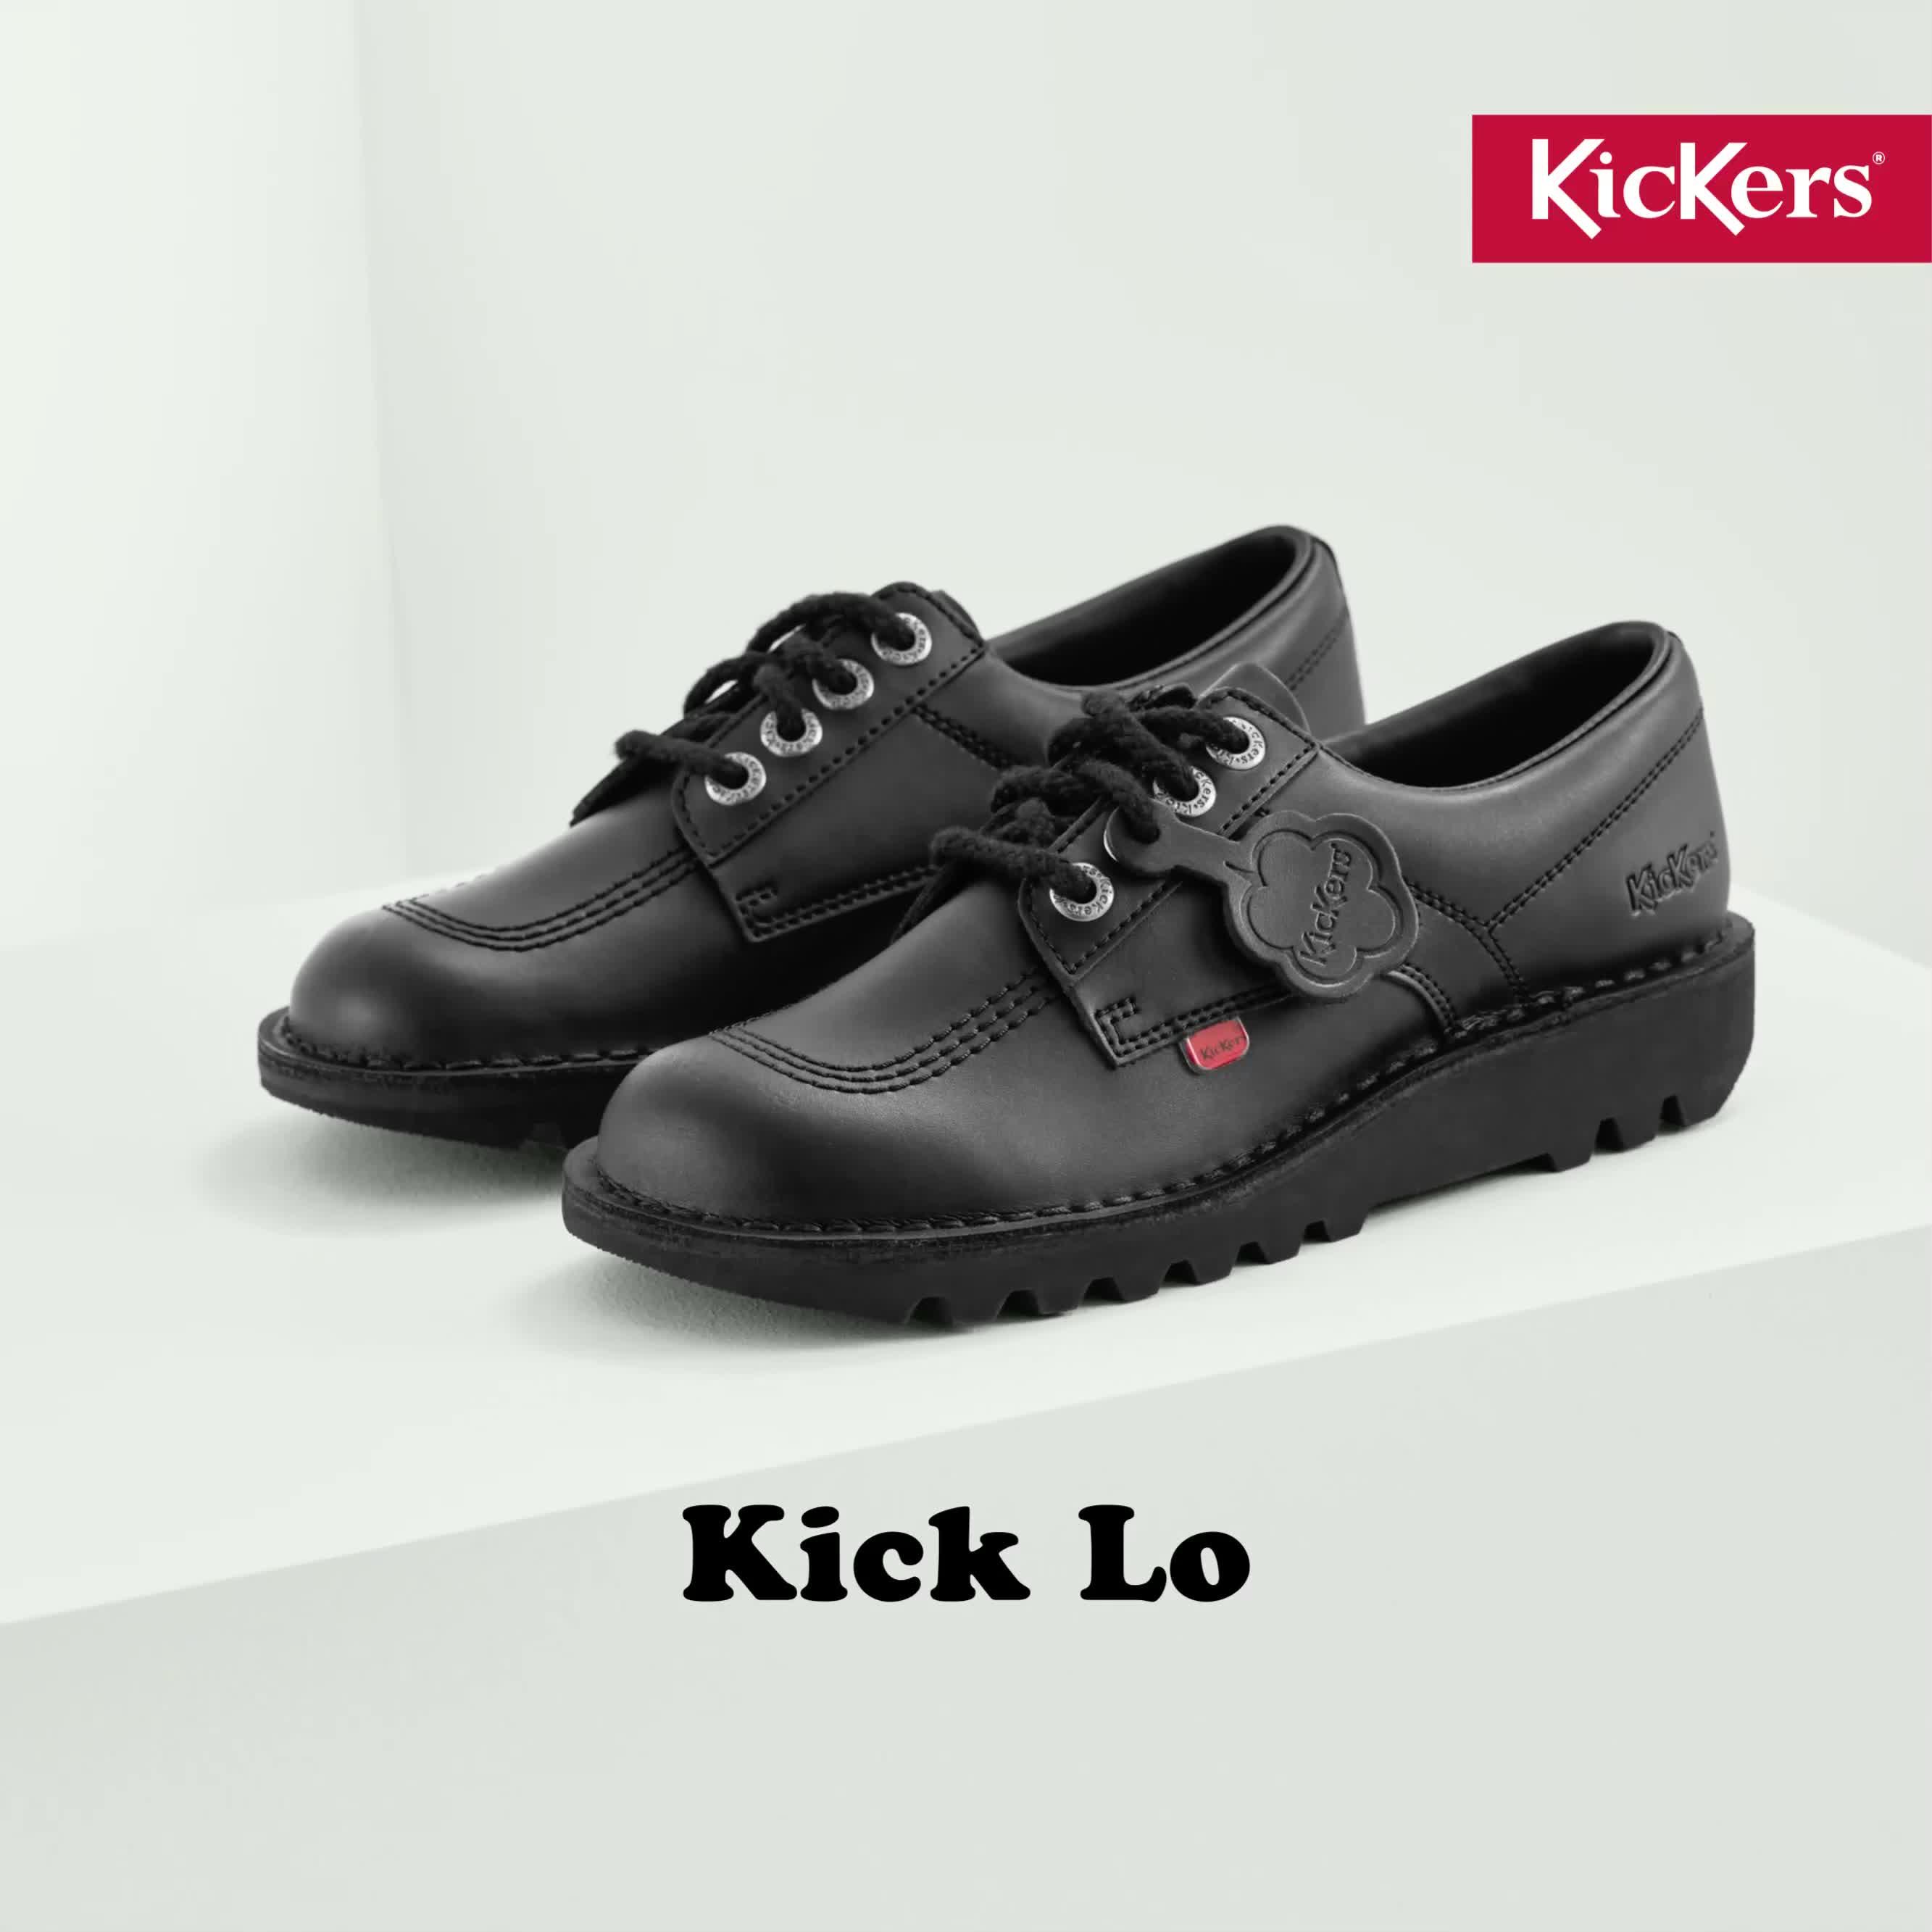 Kickers Leather Lace-up Kick Lo Core School Shoes - Black